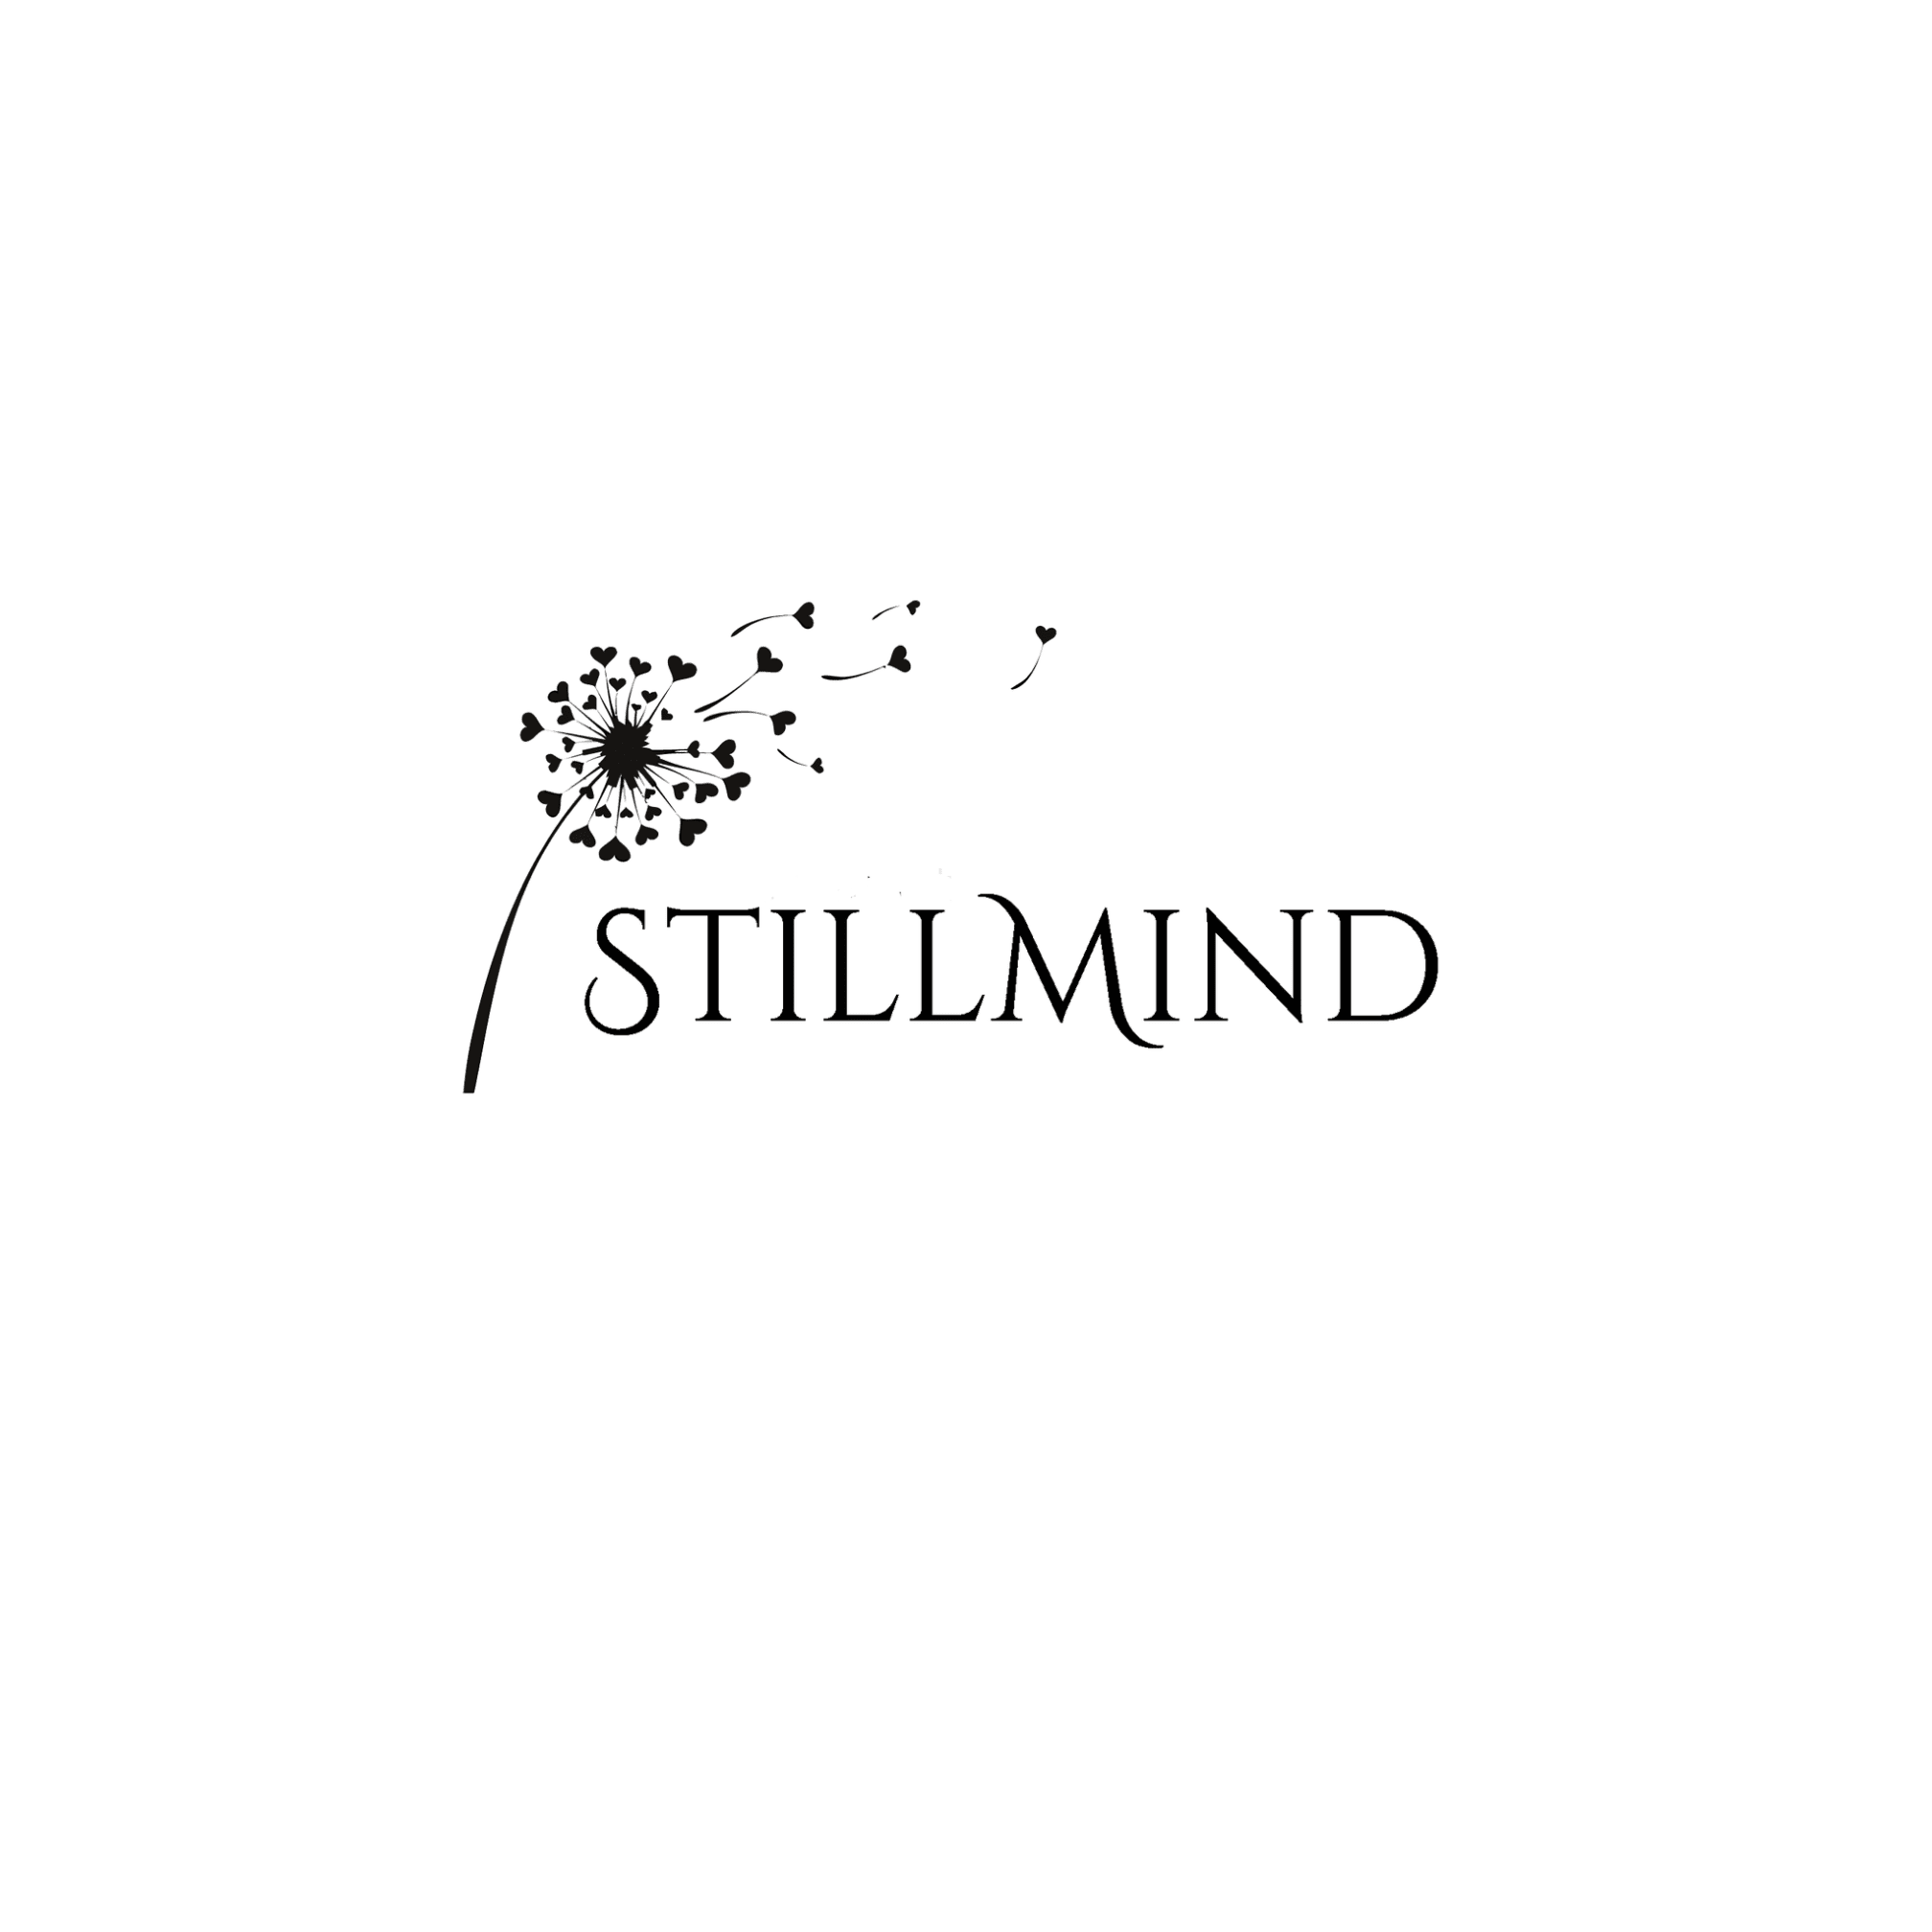 StilllMind at the Space Logo